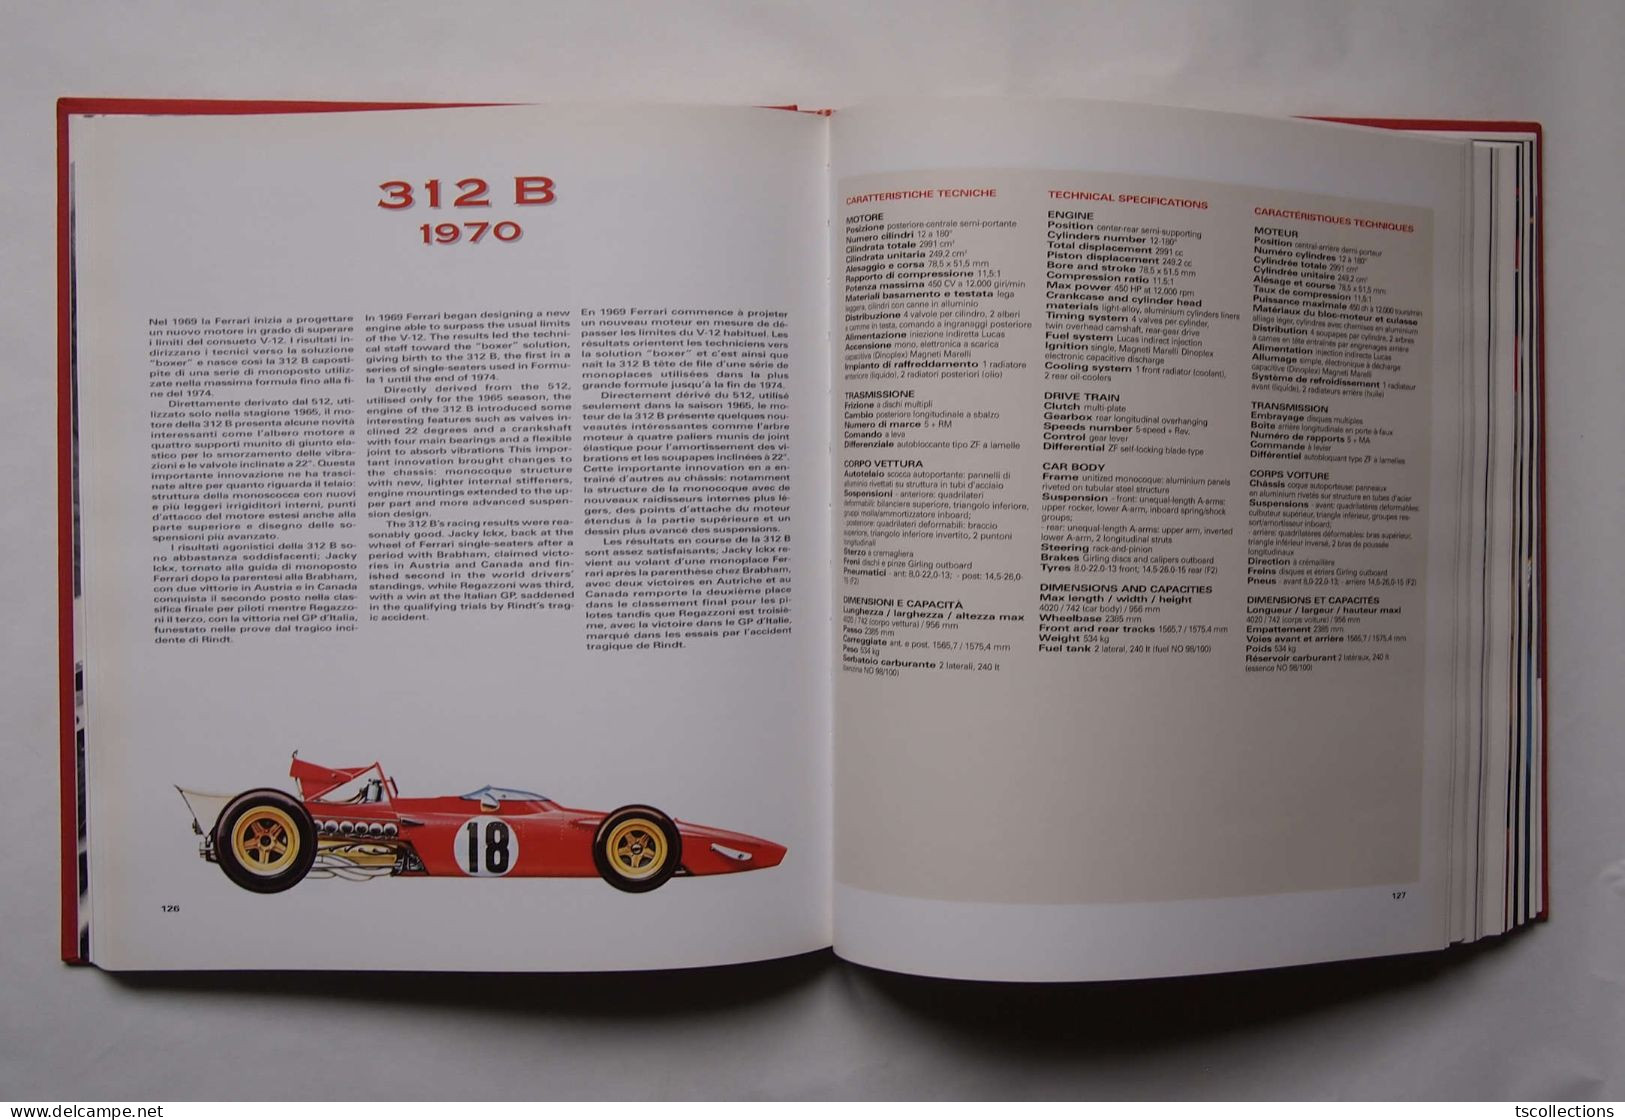 Ferrari Monoposto Catalogue Raisonné 1948 - 1997 - Automobilismo - F1